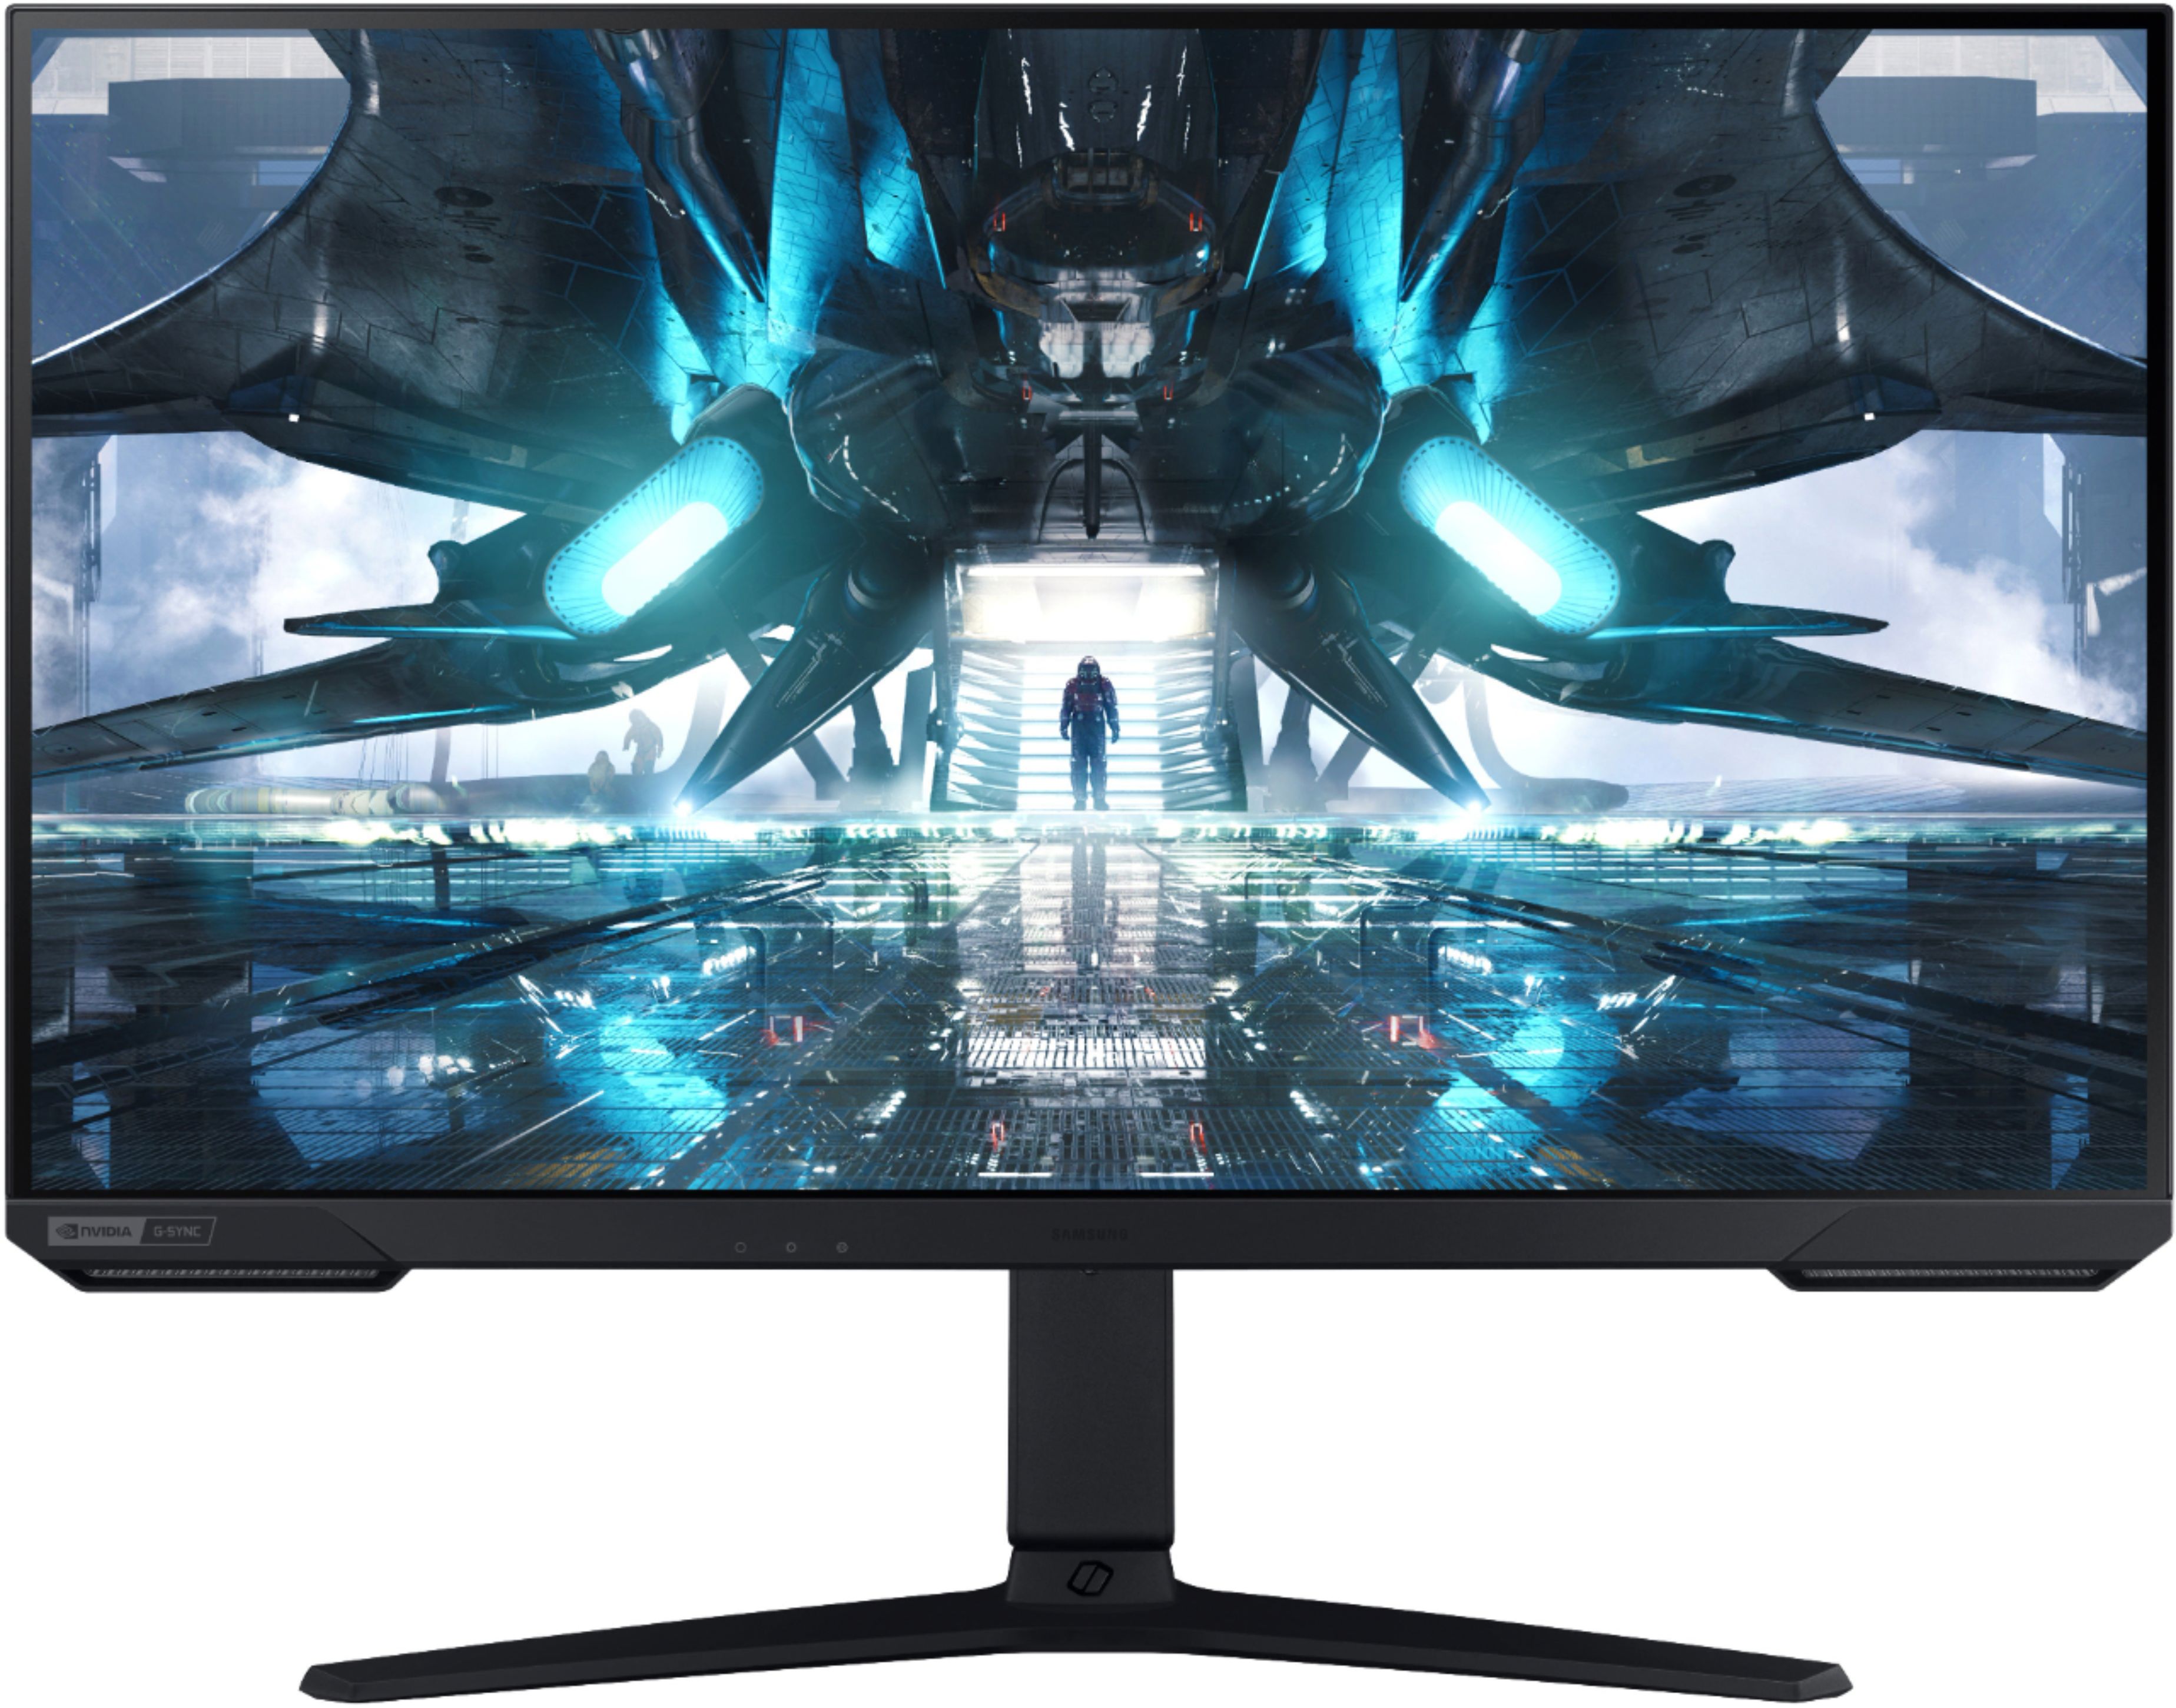 hdmi 2.1 monitor - Best Buy